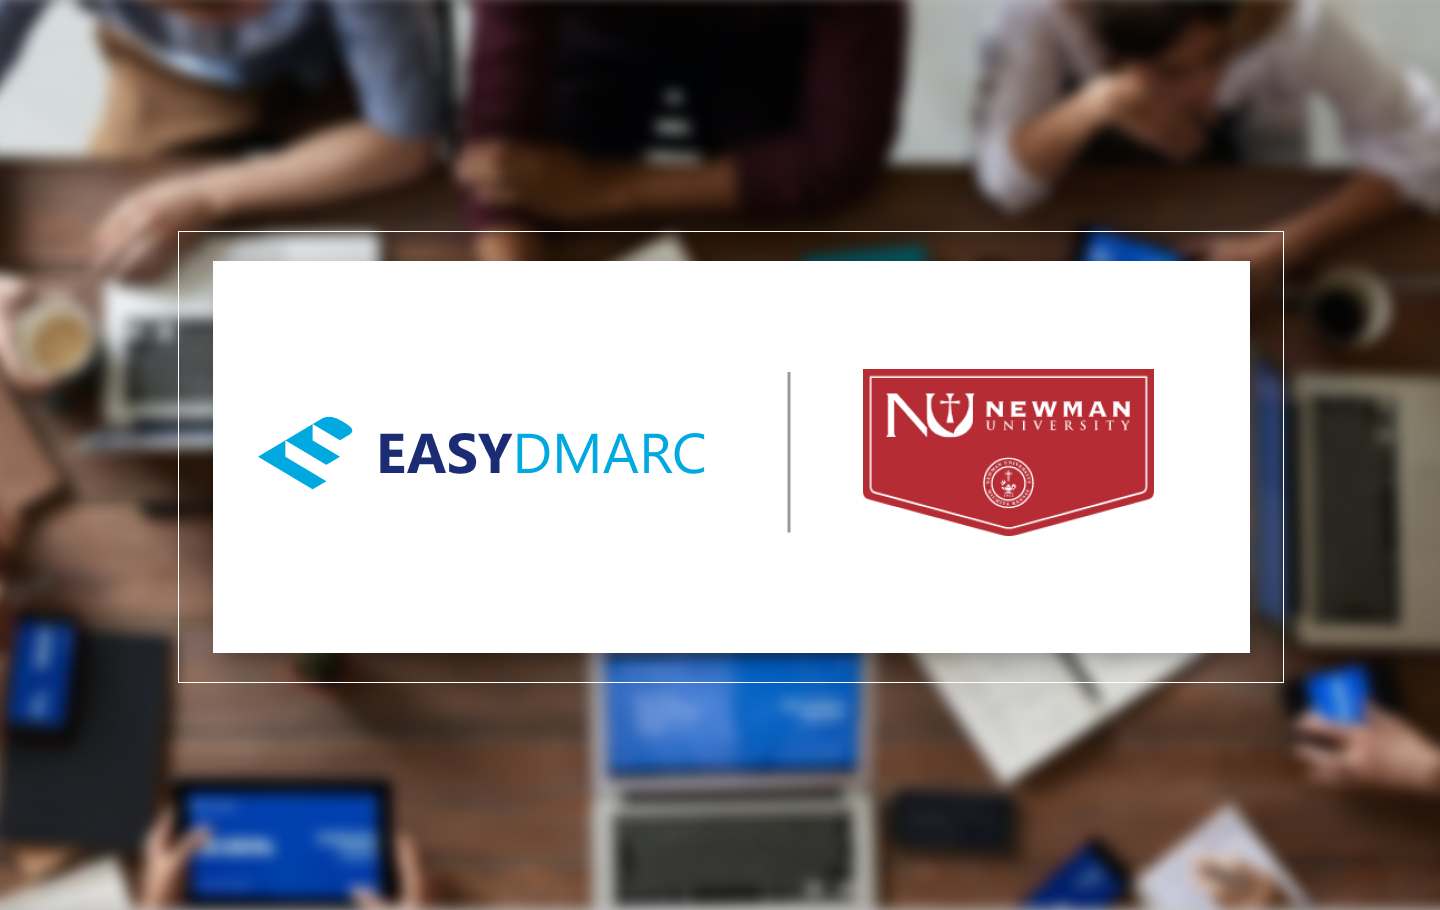 EasyDMARC and Newsman university logos next to each other